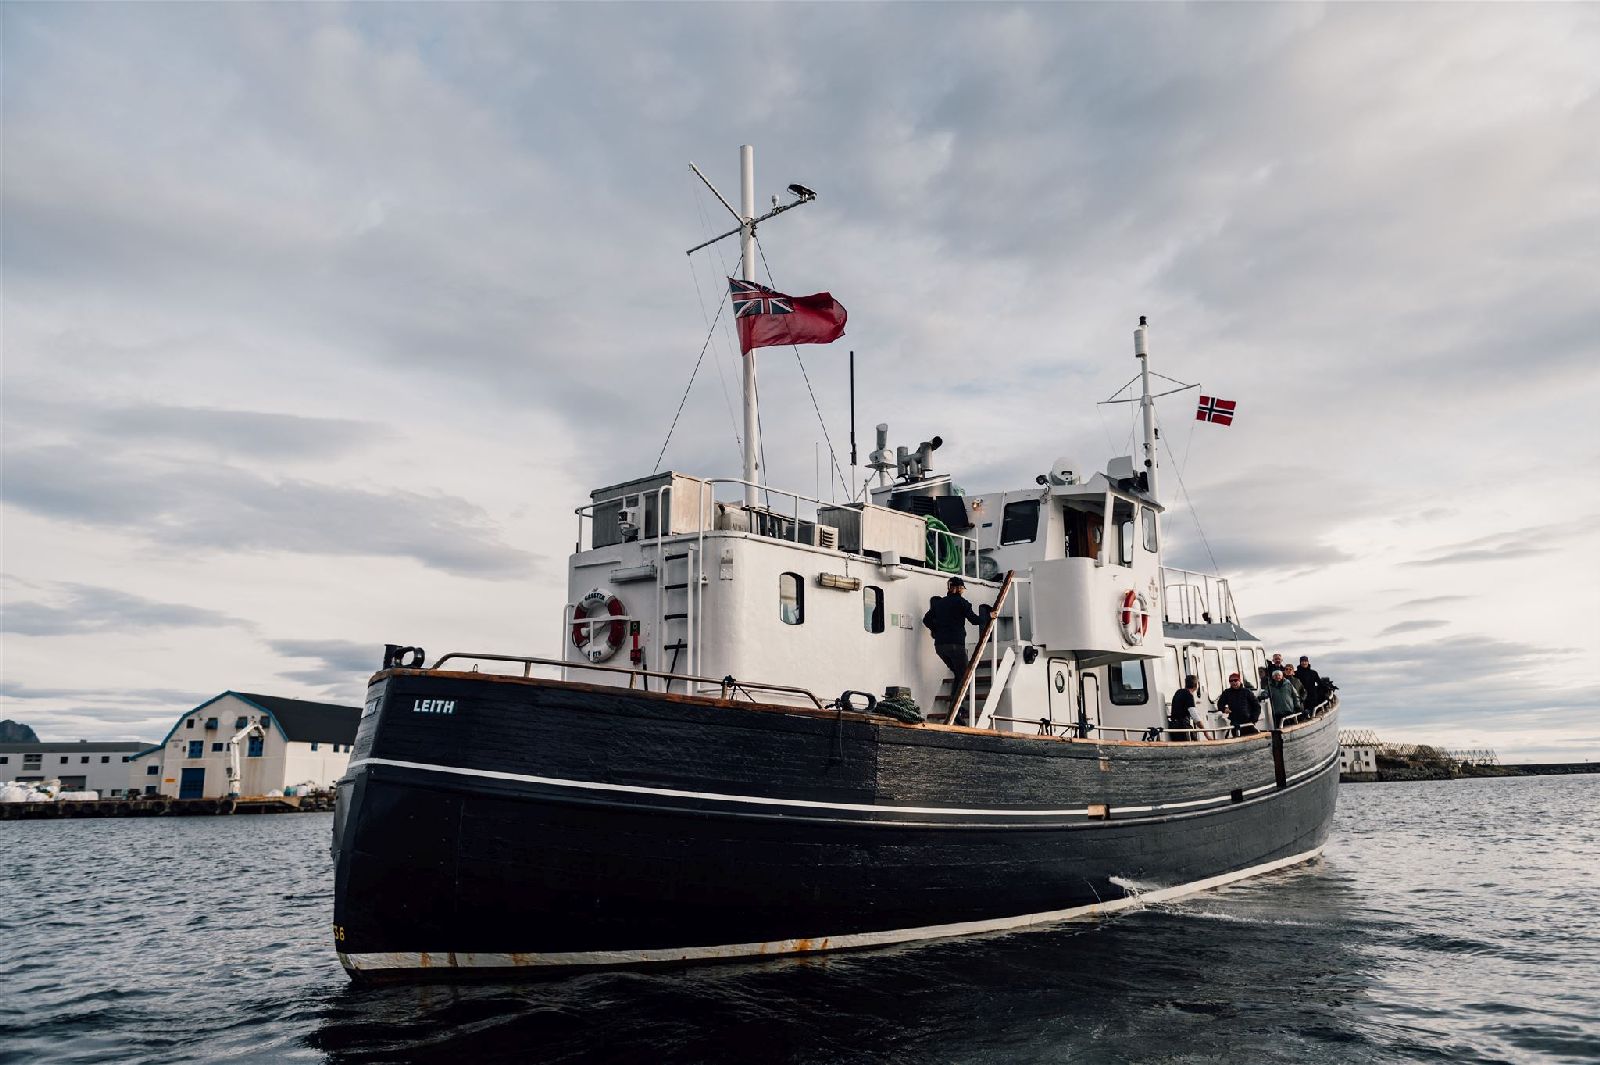 HMS Gassten sailing in the Lofoten archipelago in Norway